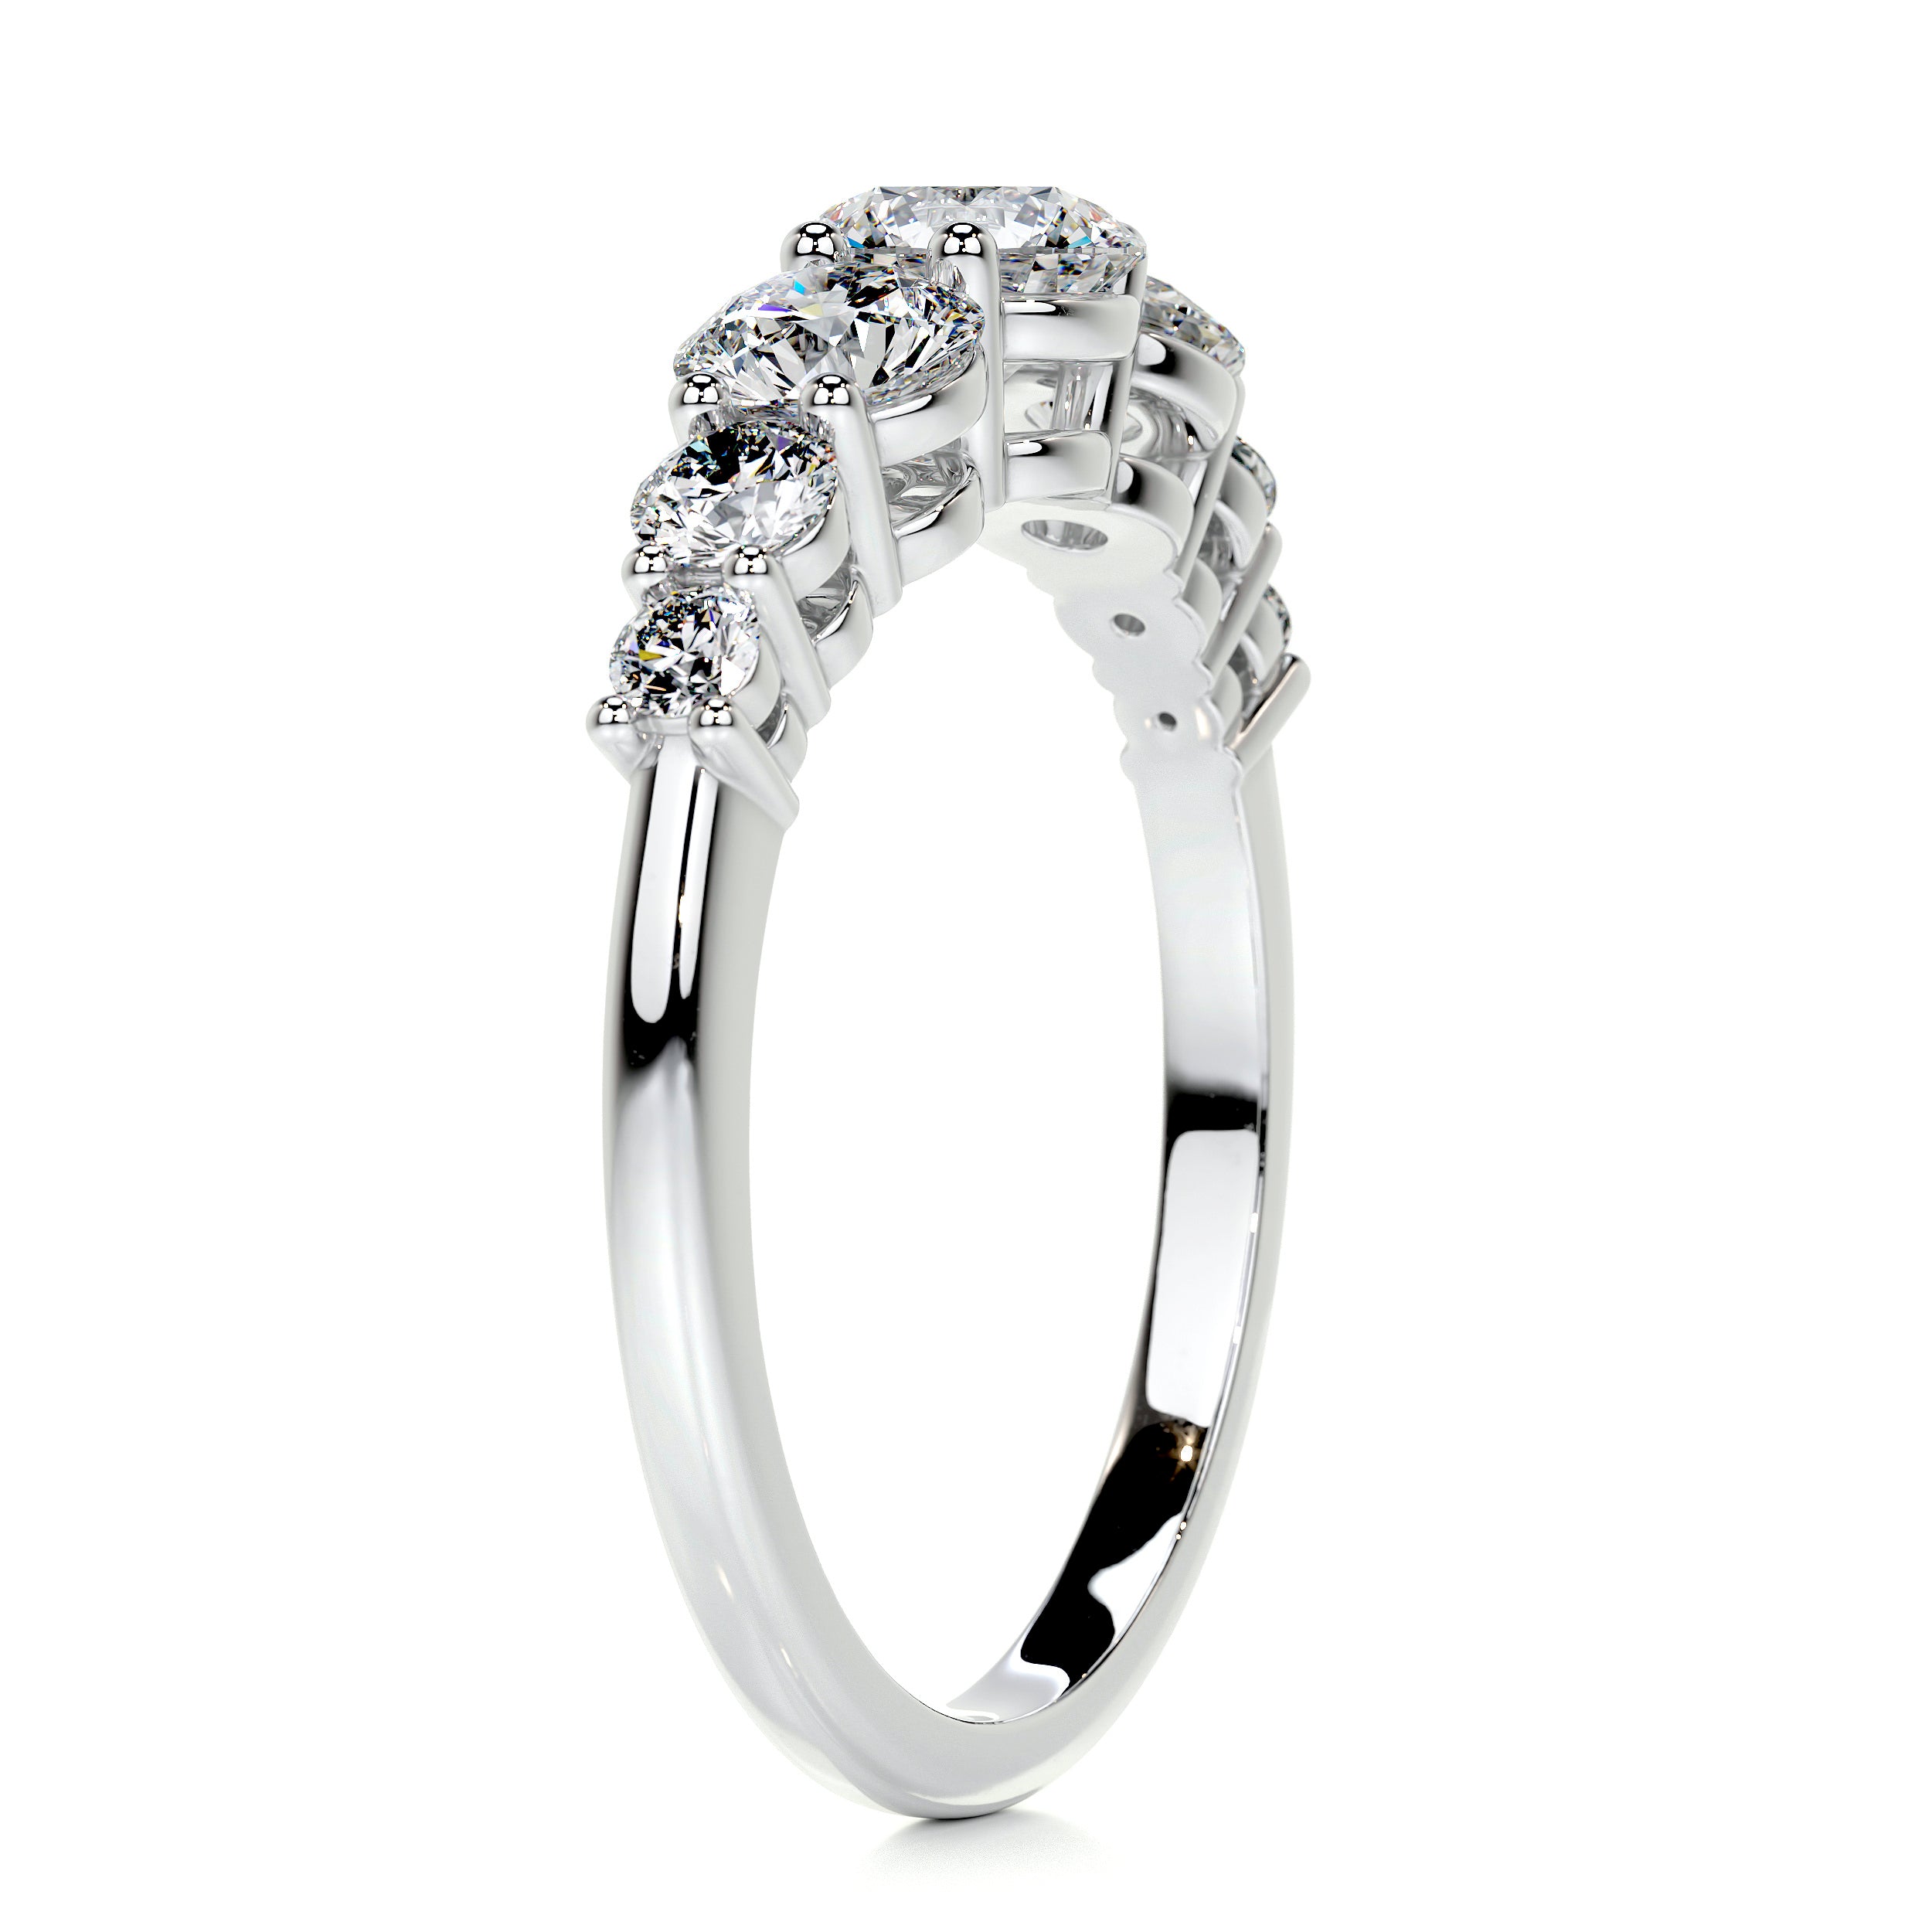 Makenzi Diamond Engagement Ring   (1.50 Carat) -18K White Gold